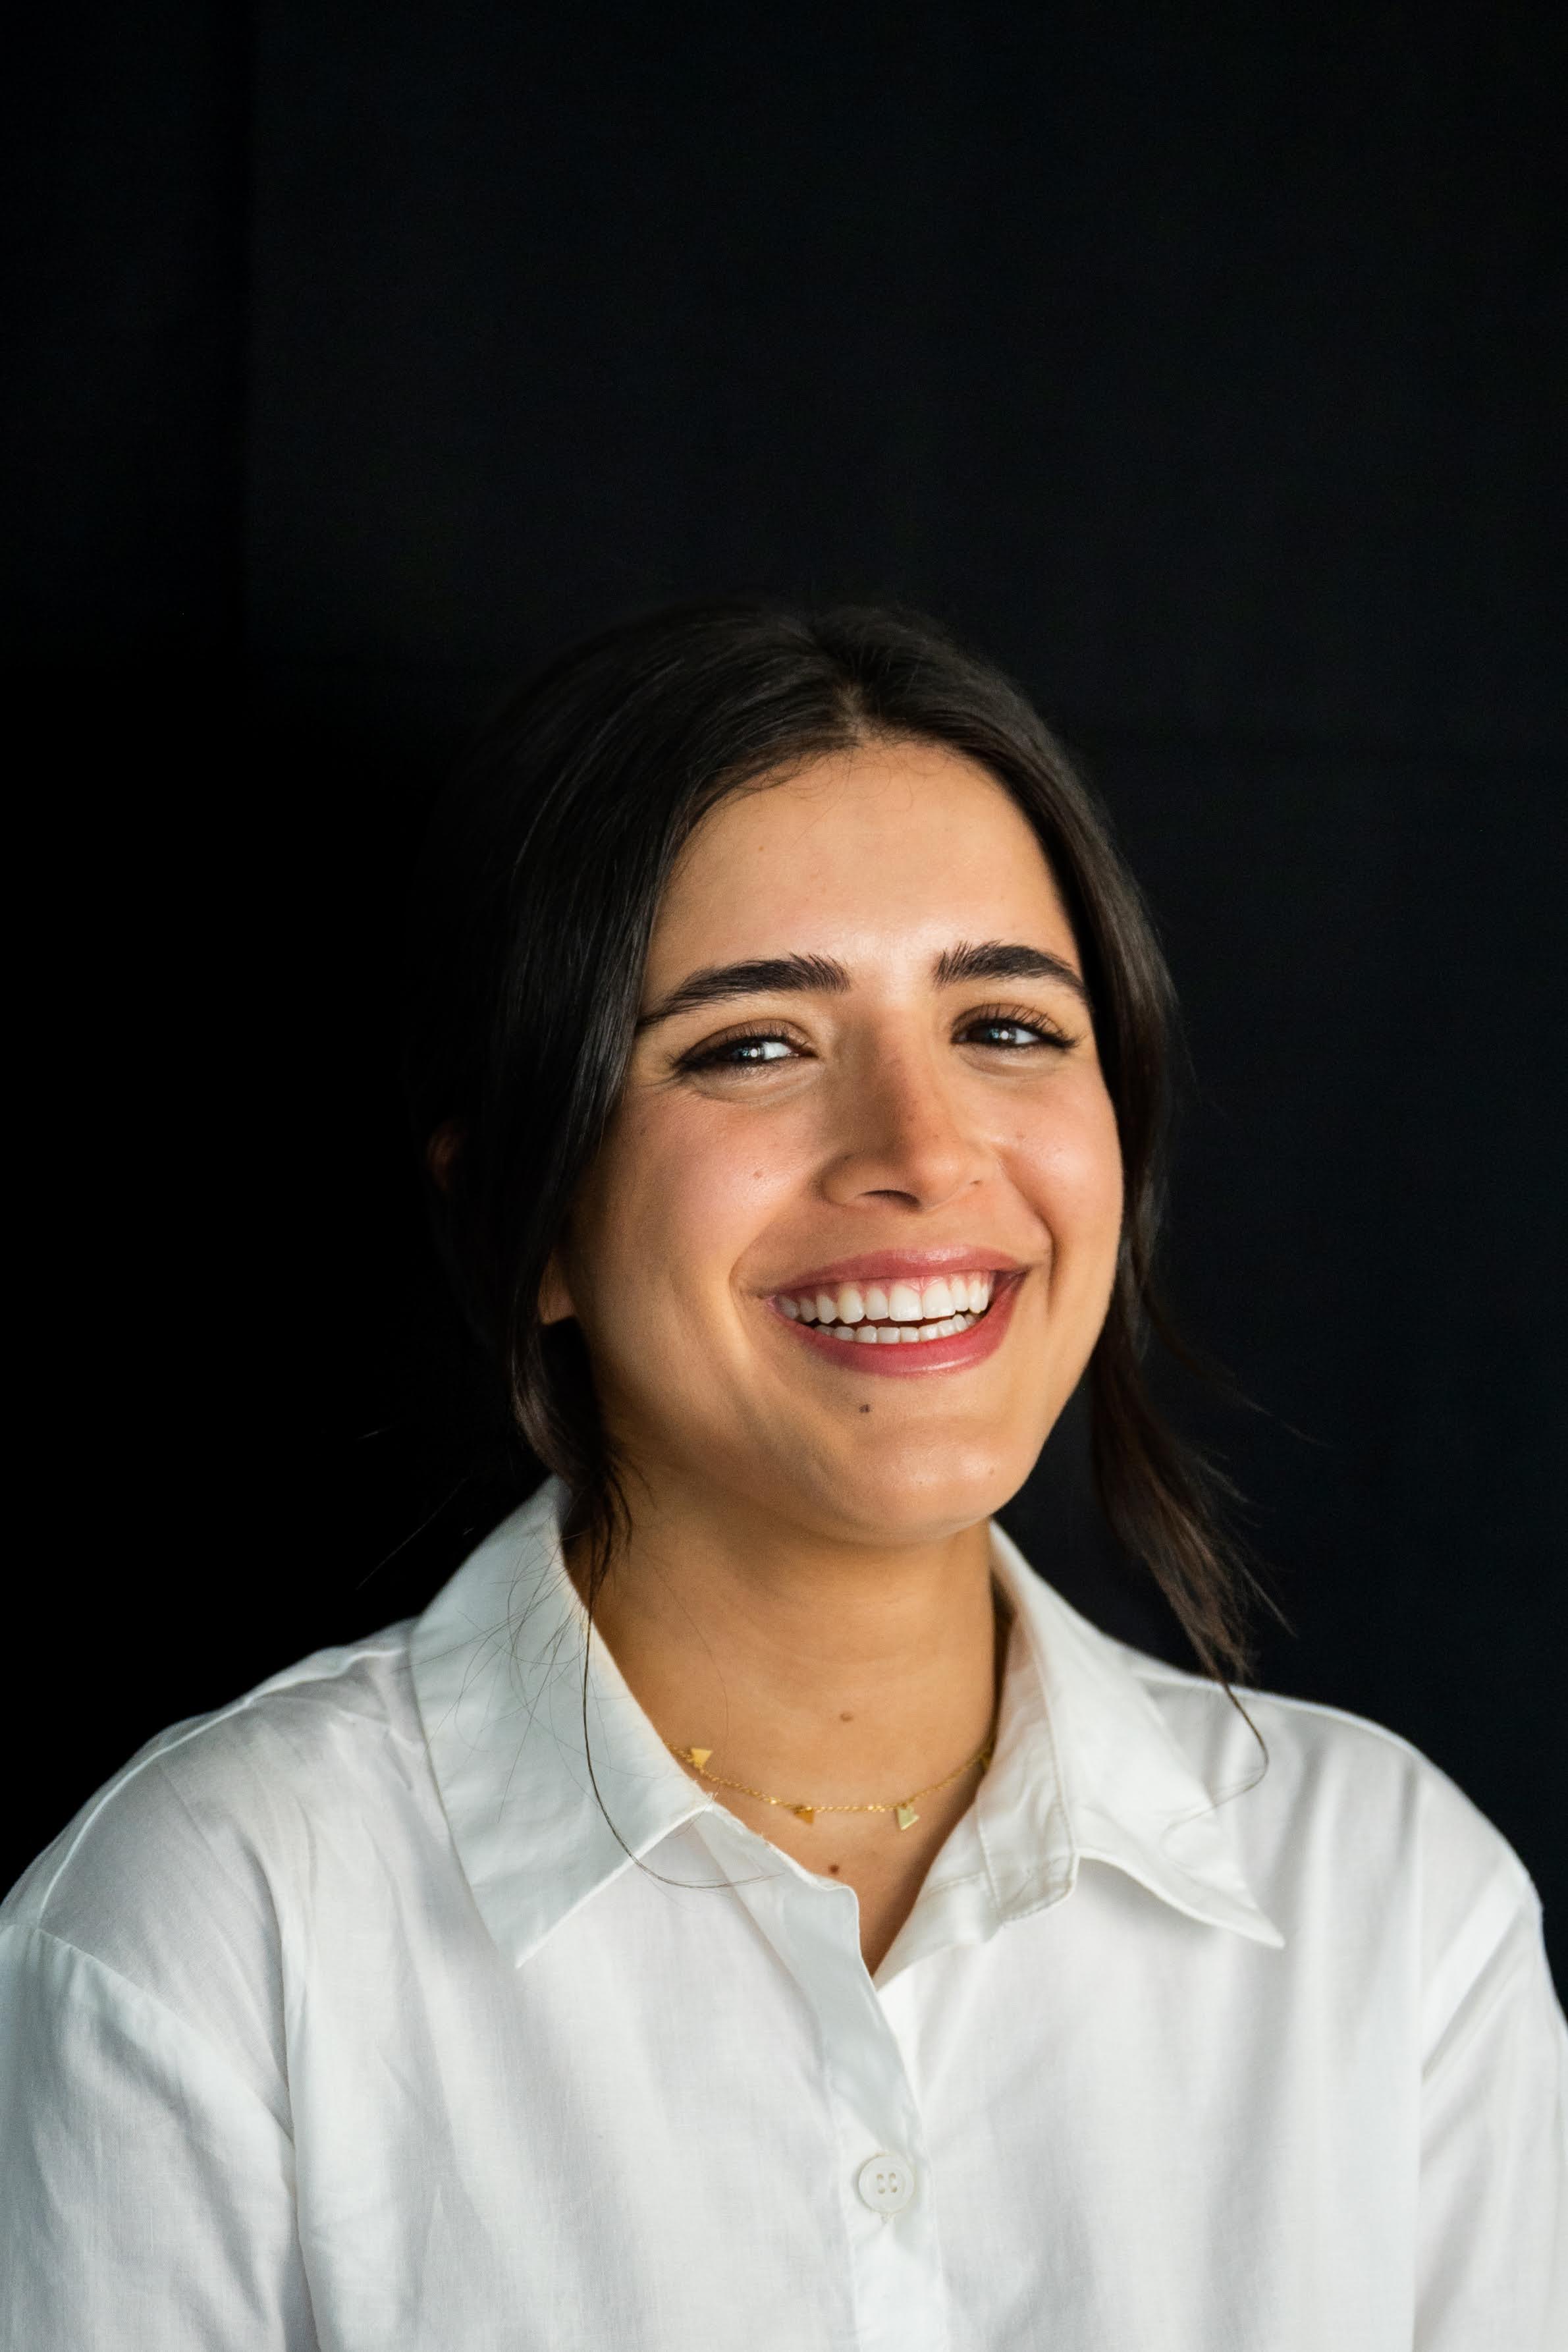 Samar smiling in front of a black background.